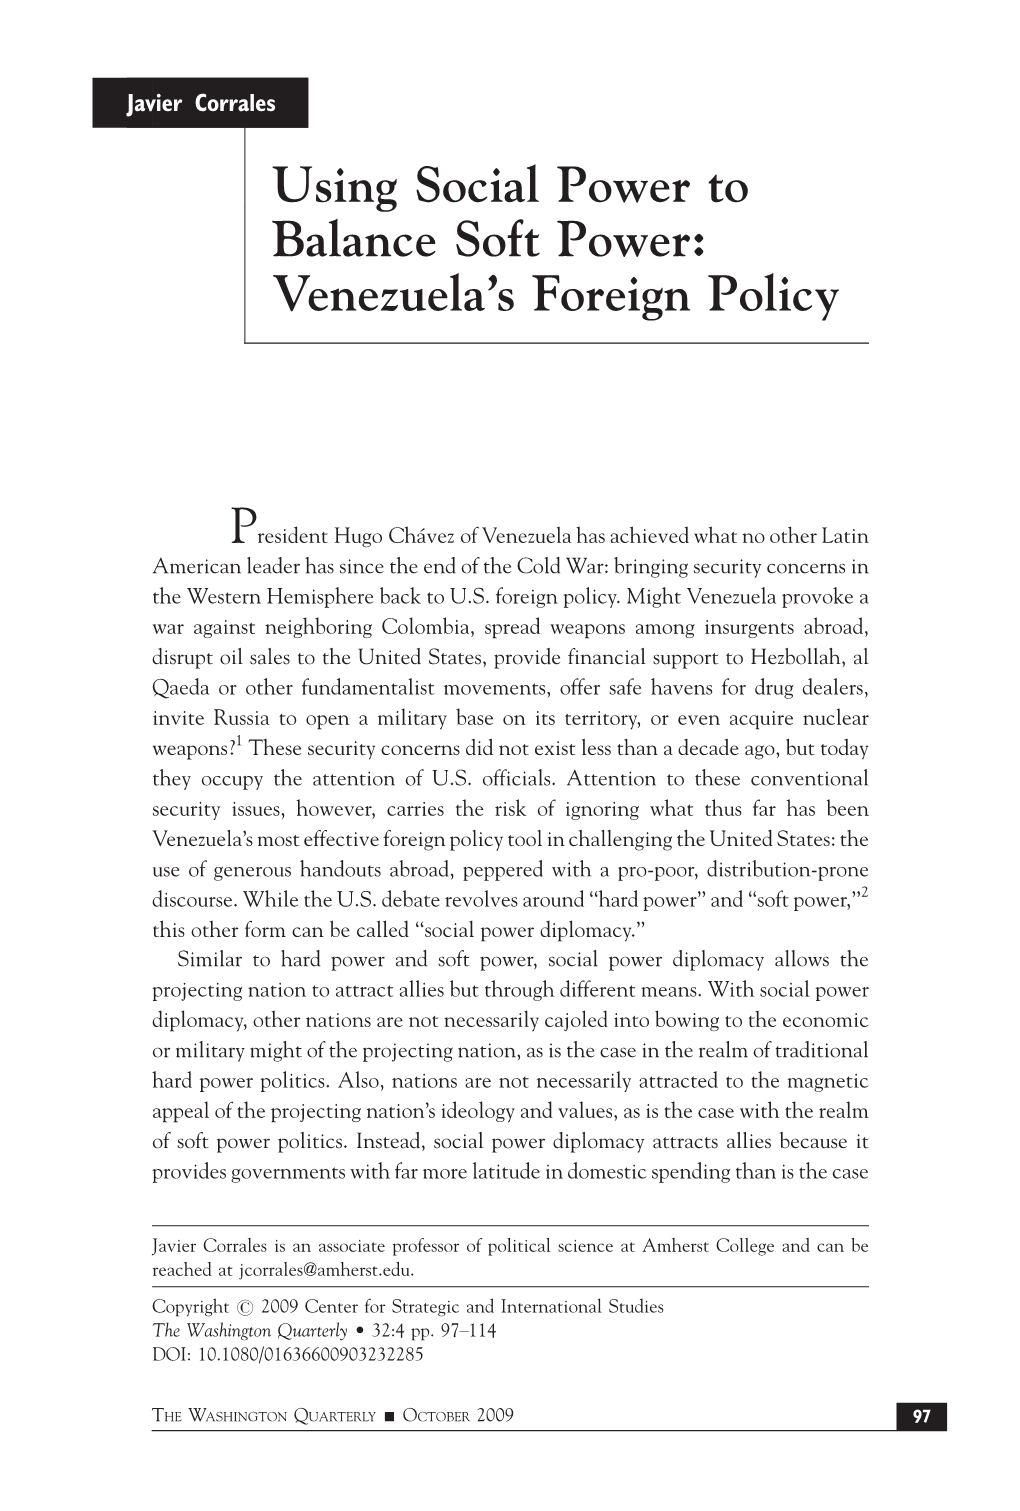 Using Social Power to Balance Soft Power: Venezuela's Foreign Policy